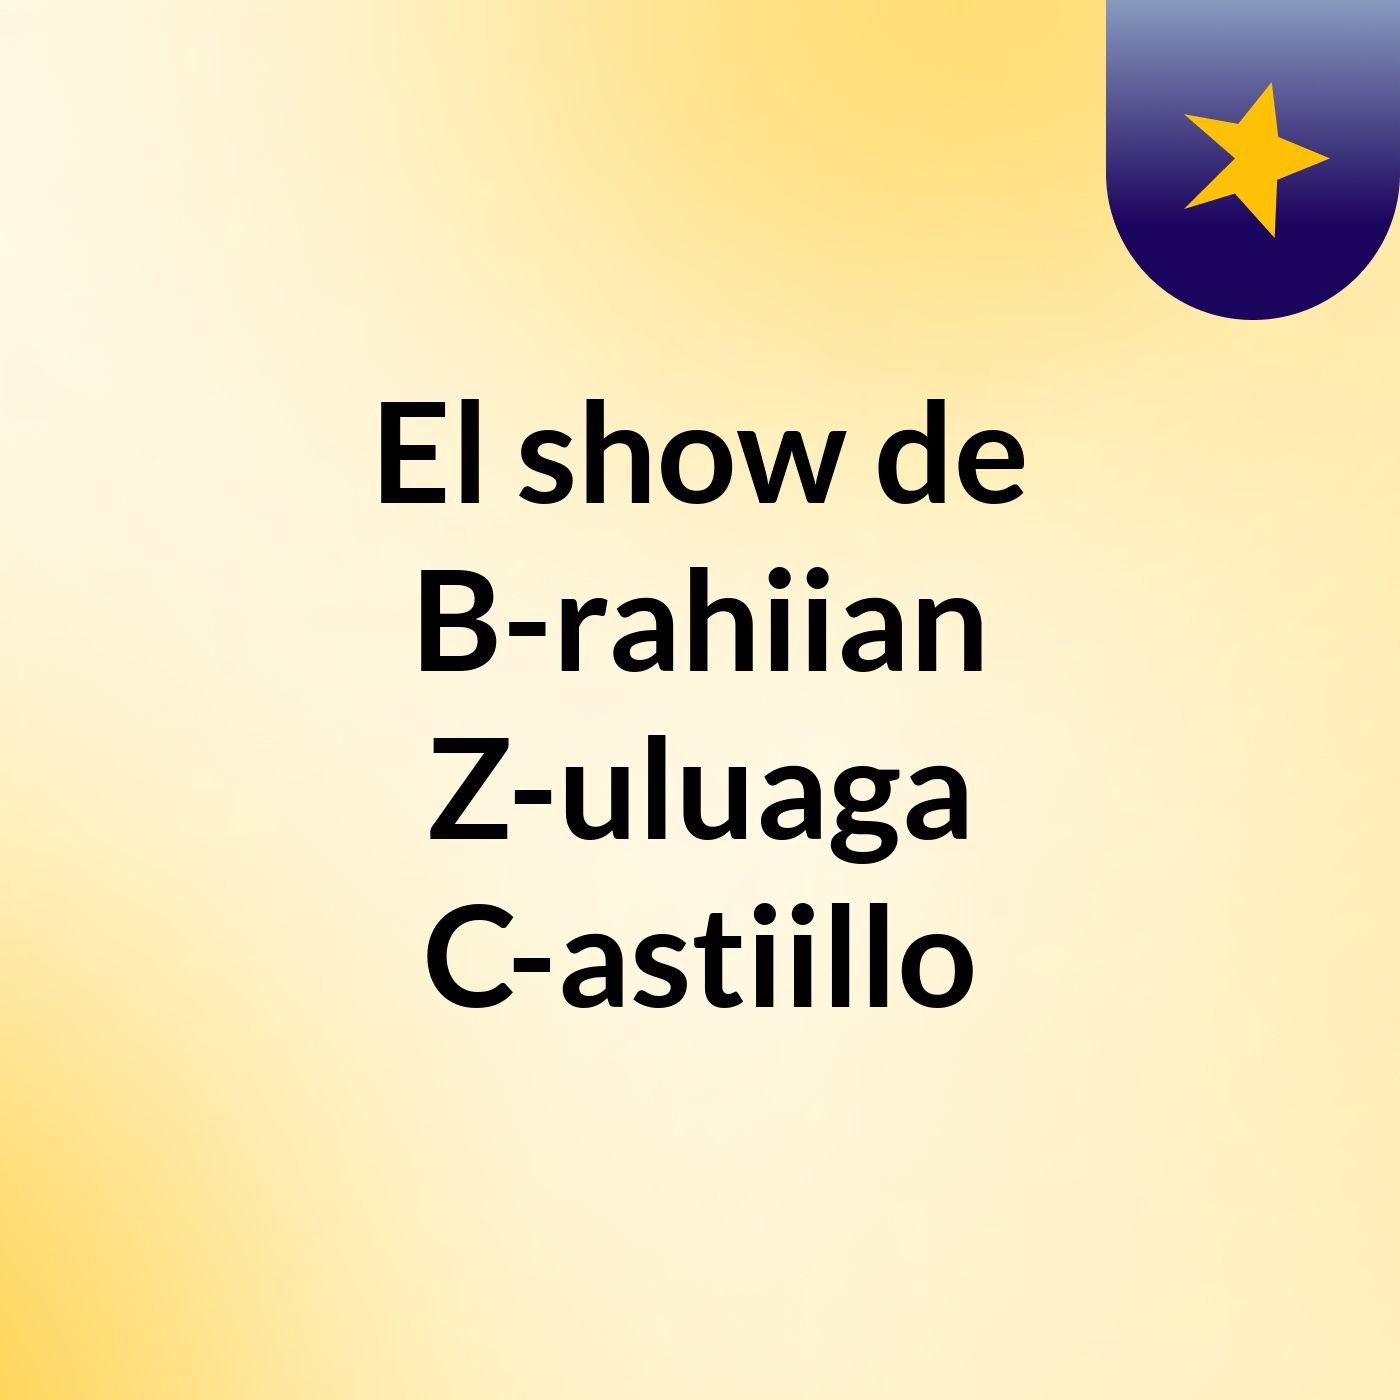 El show de B-rahiian Z-uluaga C-astiillo